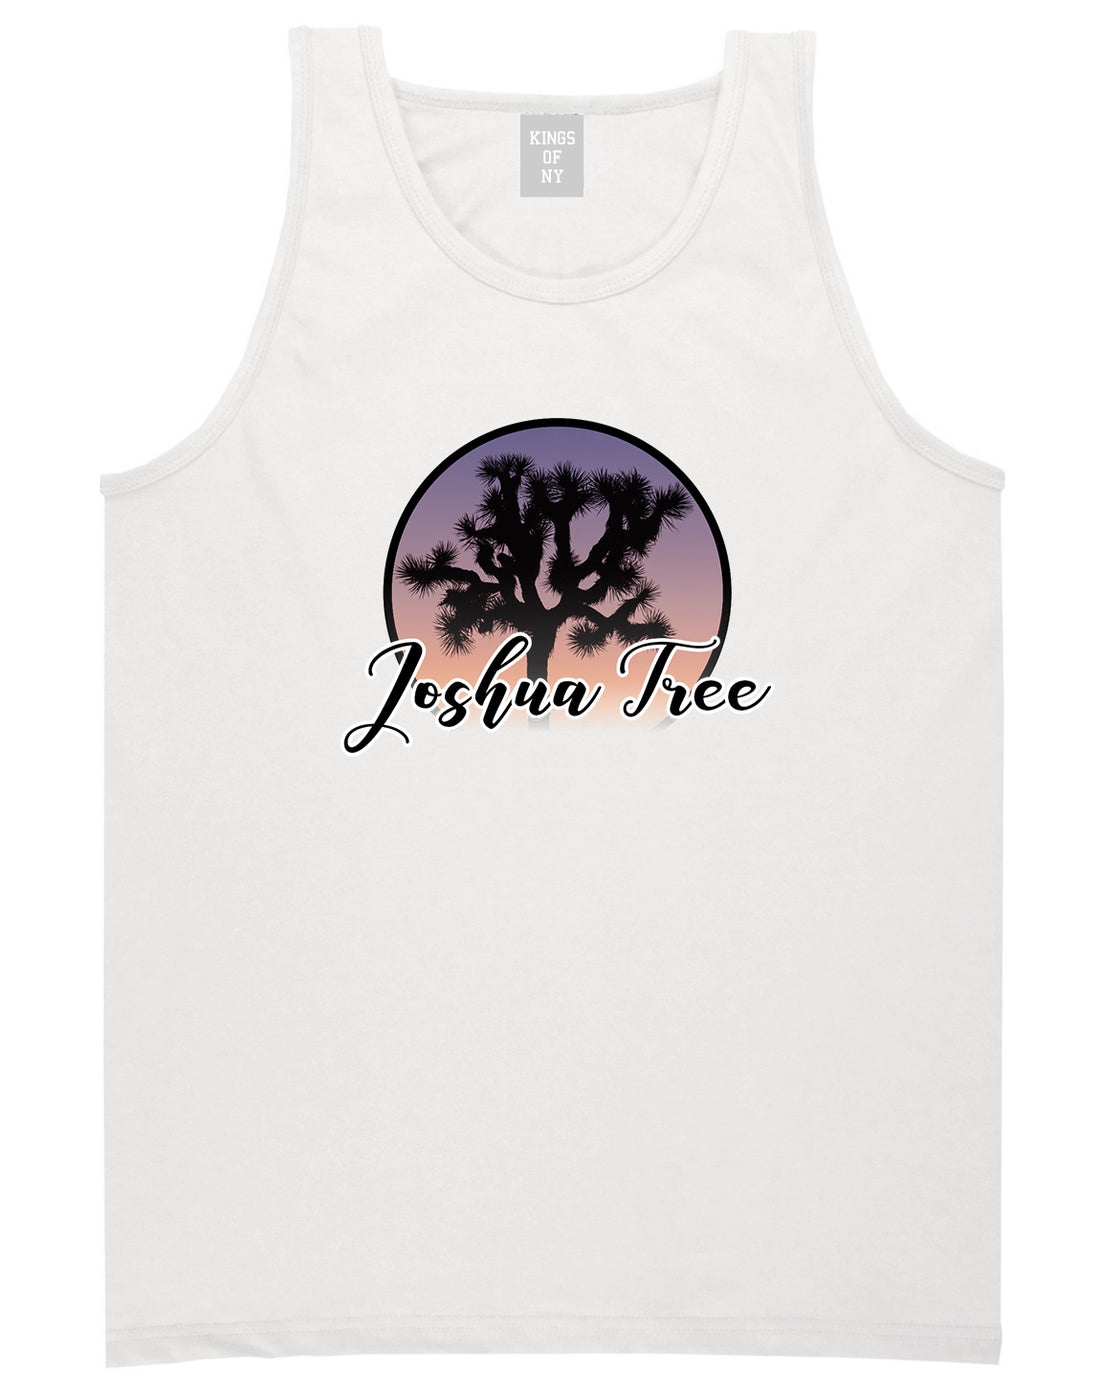 Joshua Tree Mens Tank Top Shirt White